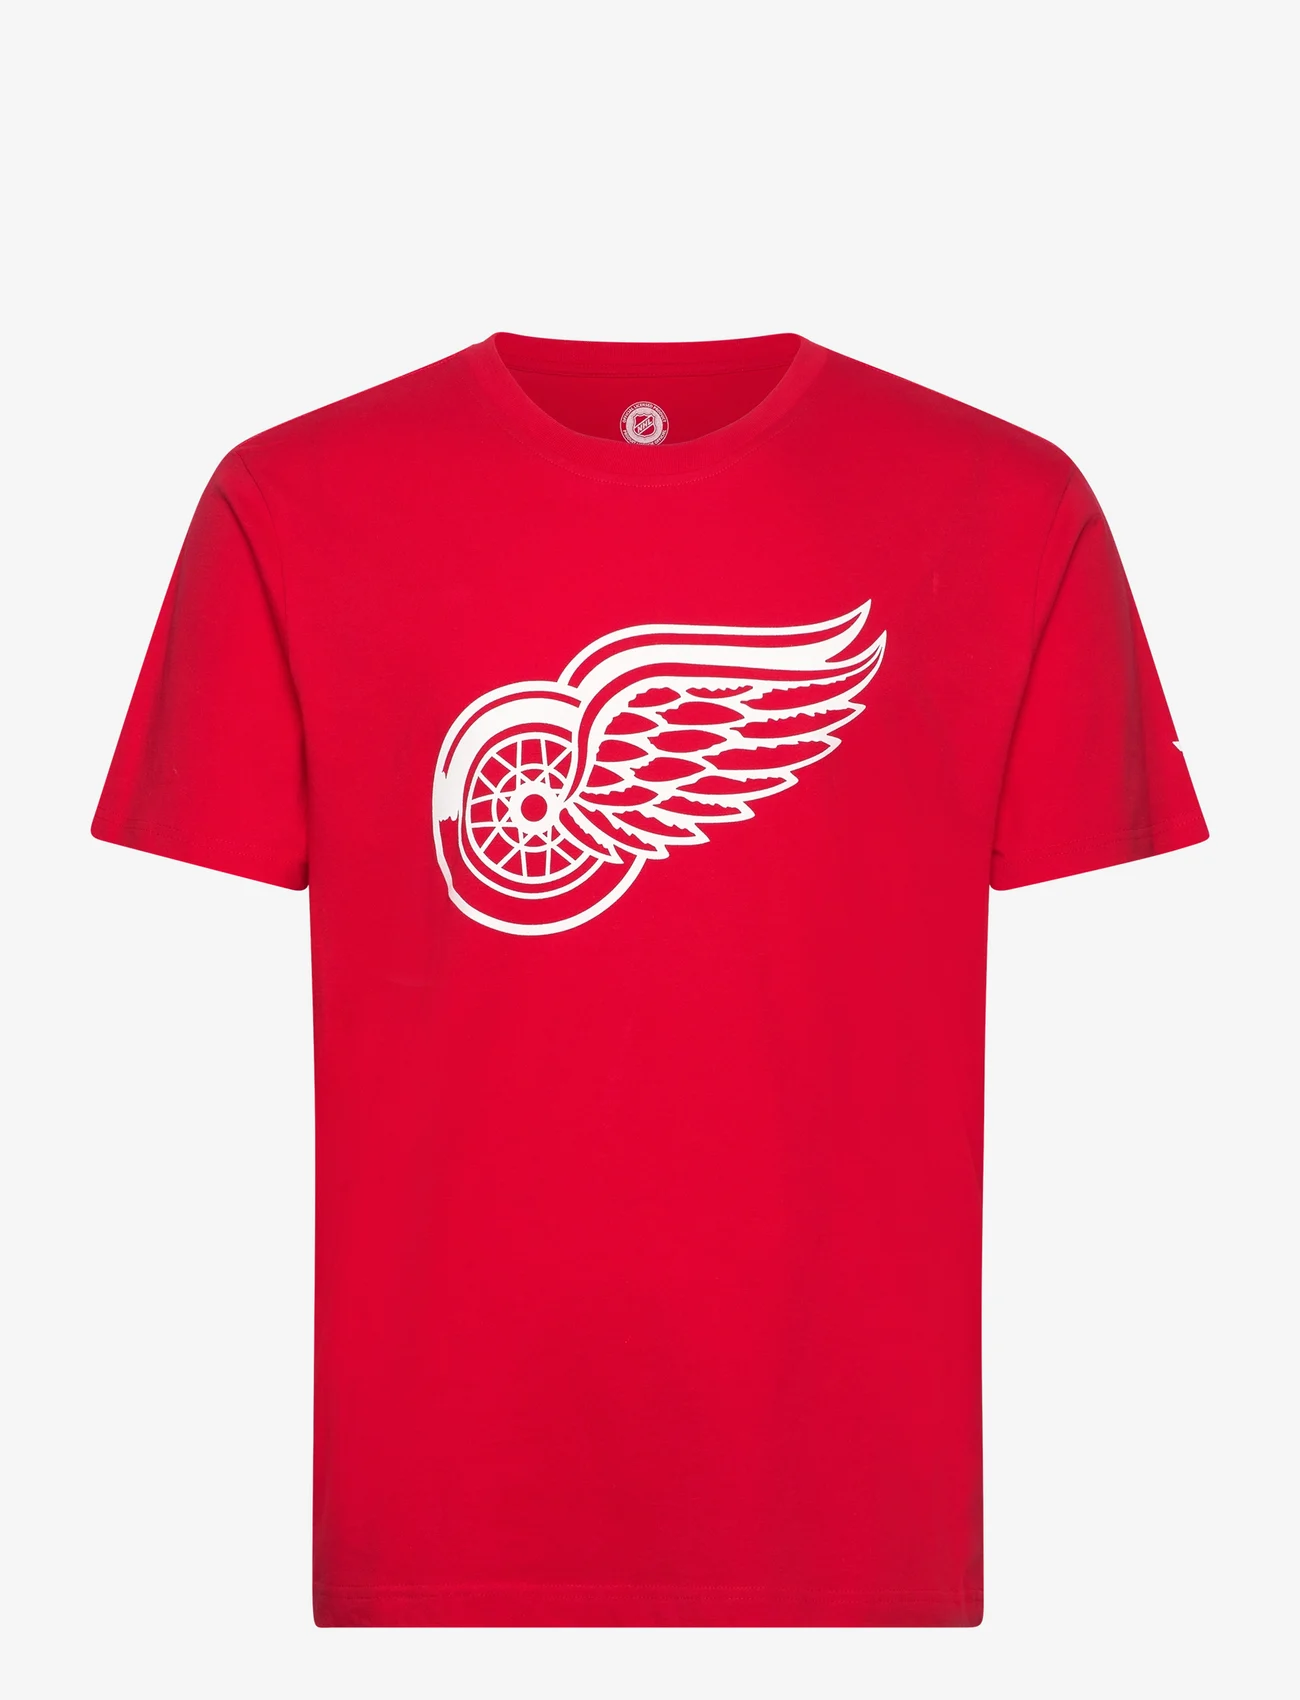 Fanatics - Detroit Red Wings Primary Logo Graphic T-Shirt - die niedrigsten preise - athletic red - 0